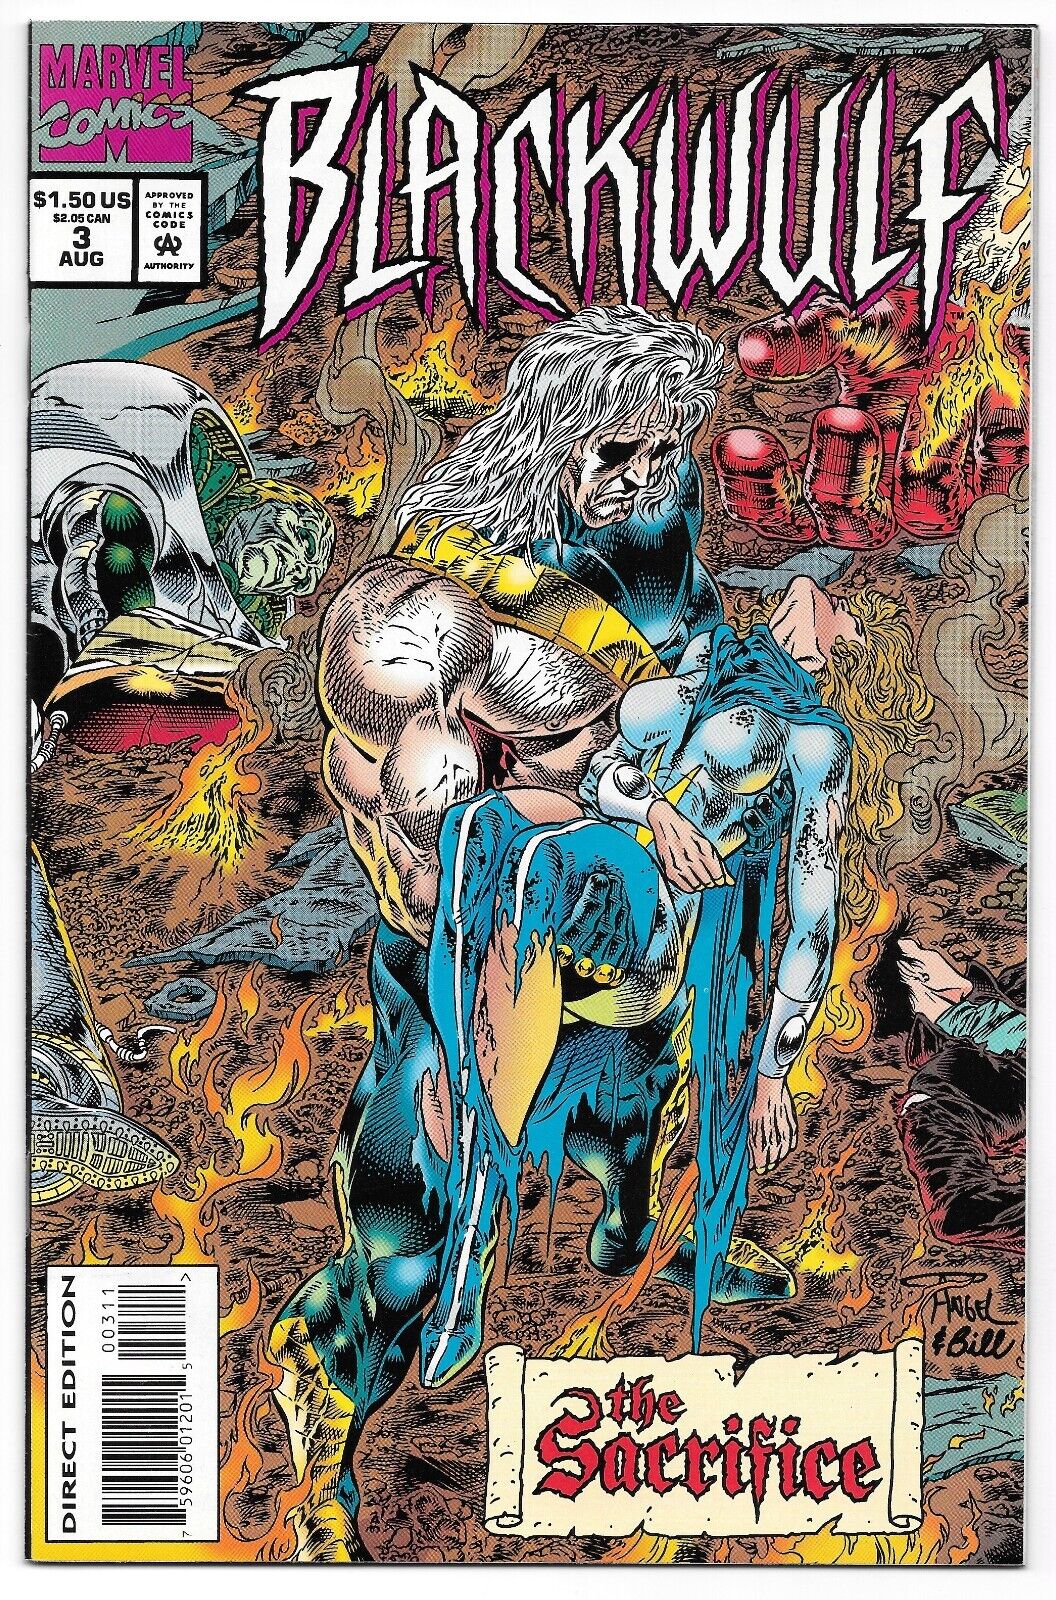 Blackwulf #3 (08/1994) Marvel Comics The Sacrifice